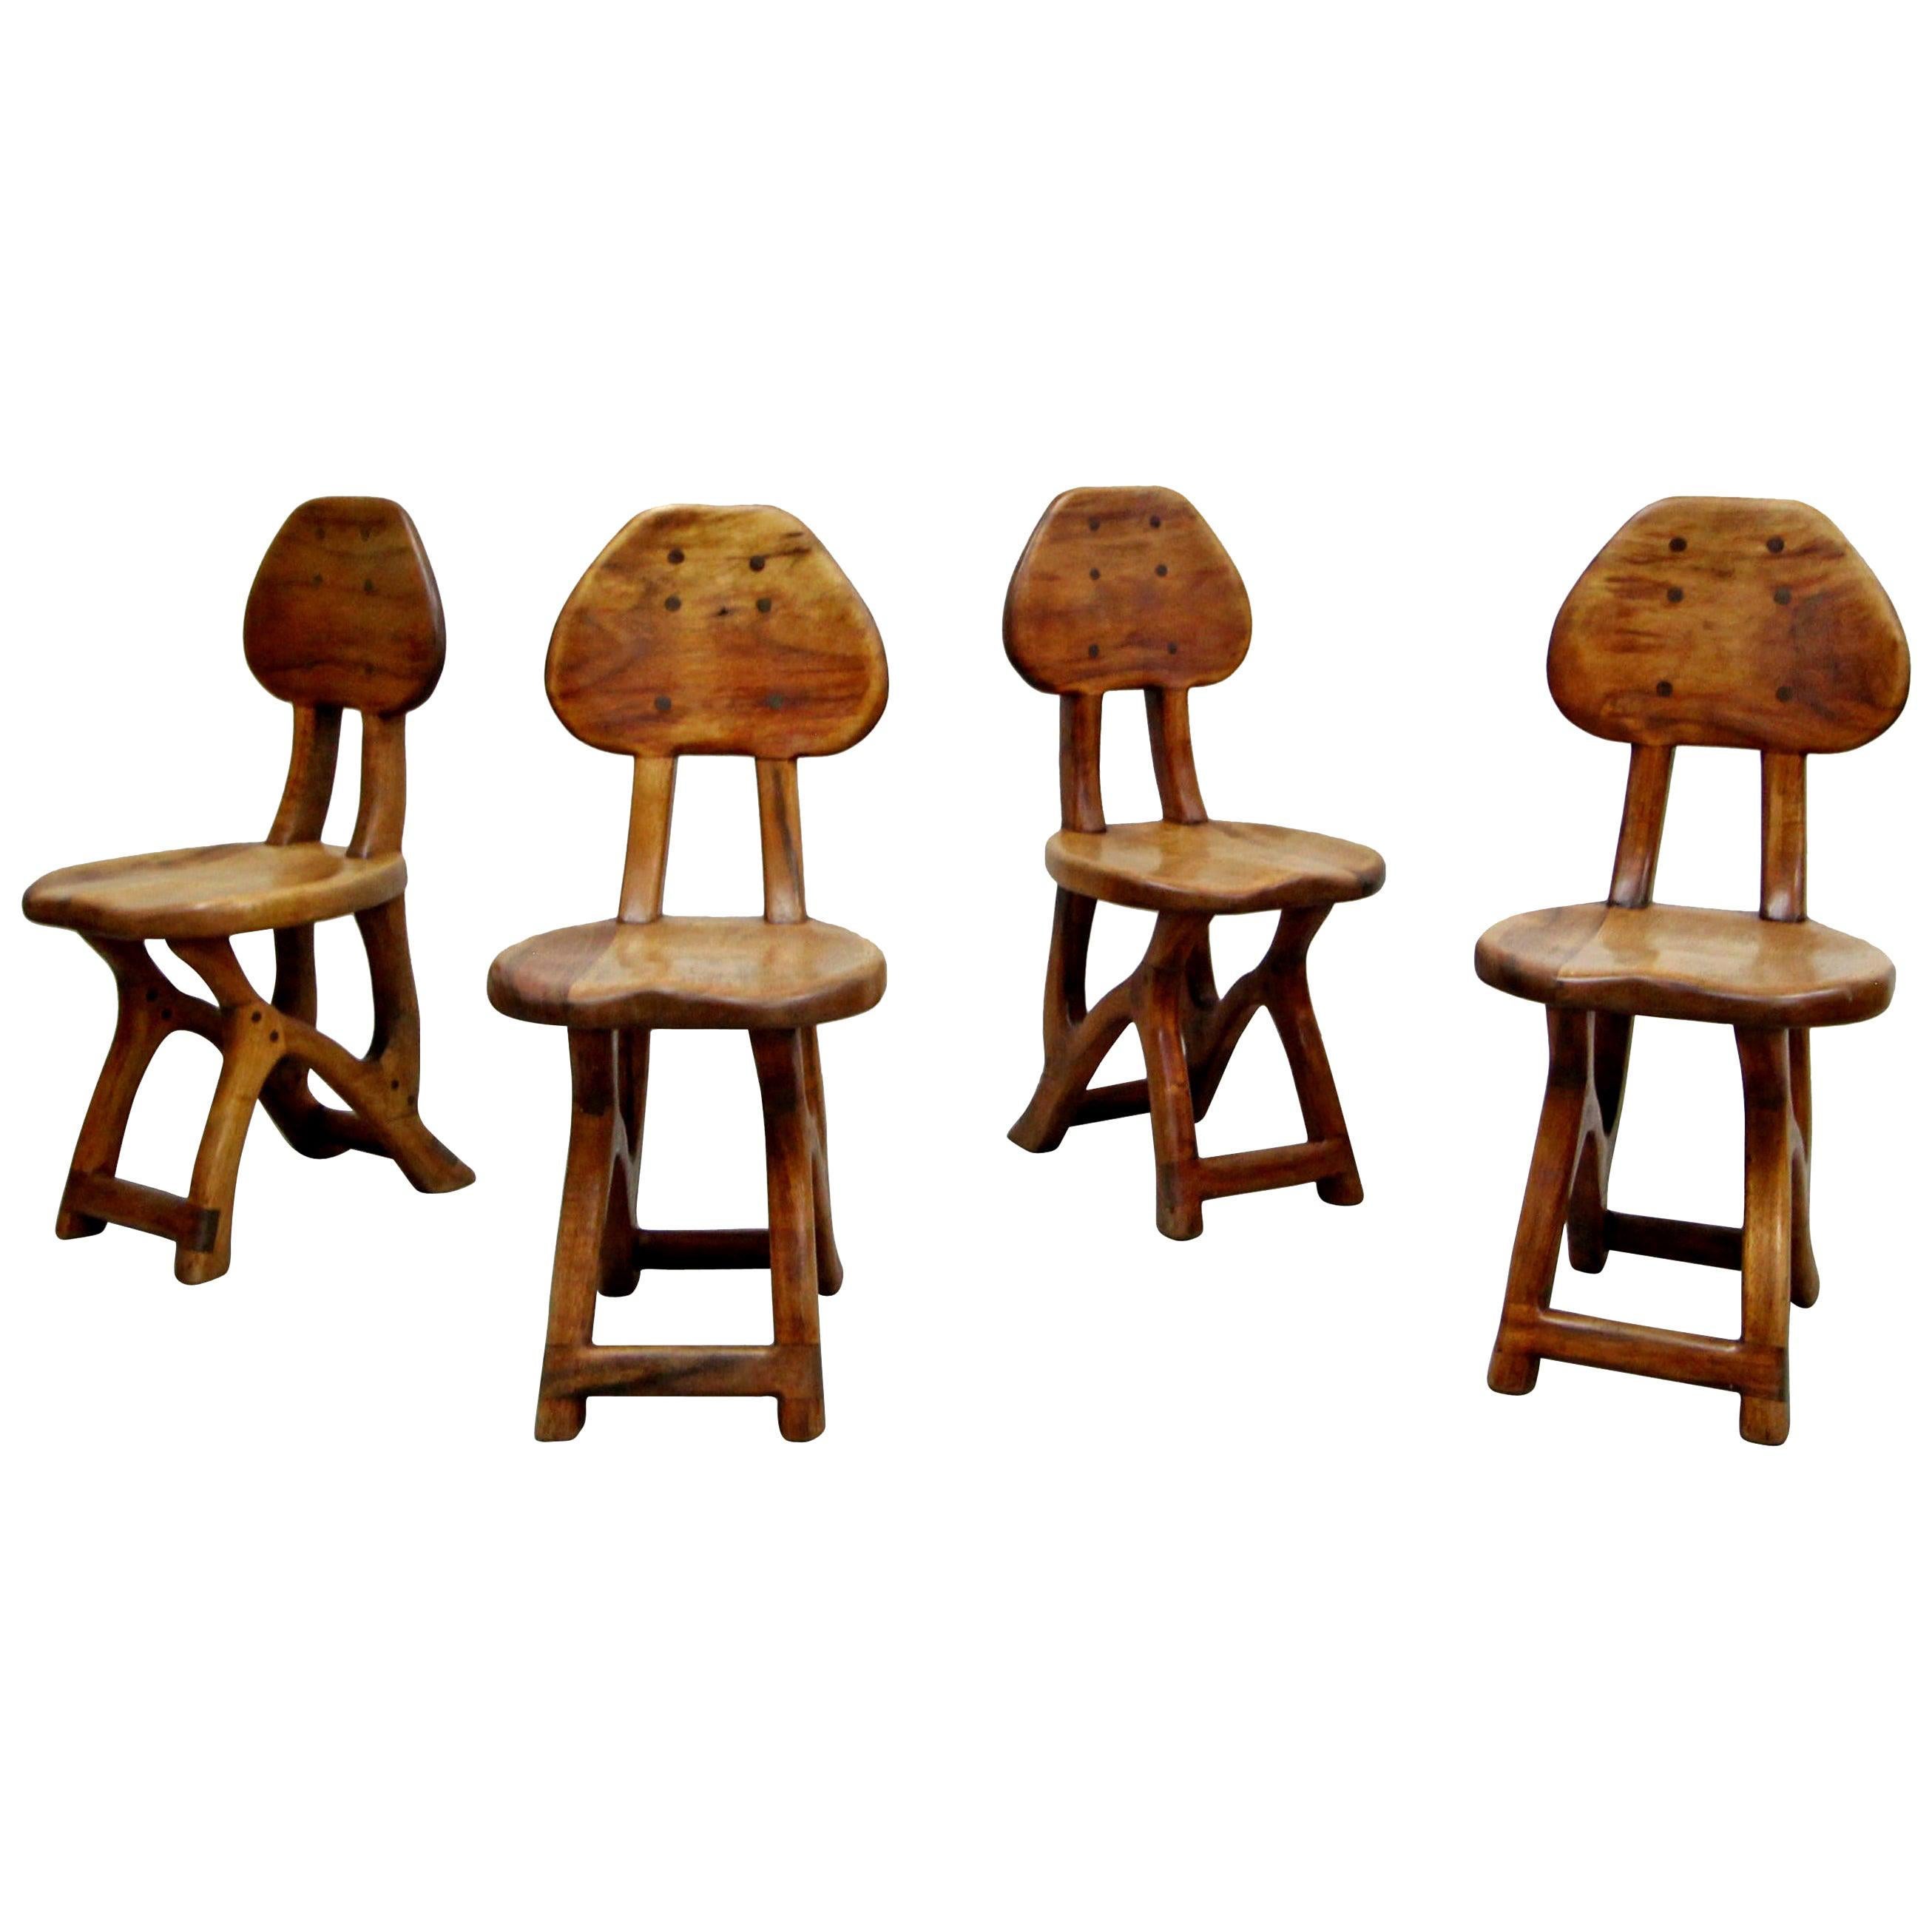 Set of 4 California Modern Primitive Studio Craft Wood Chairs